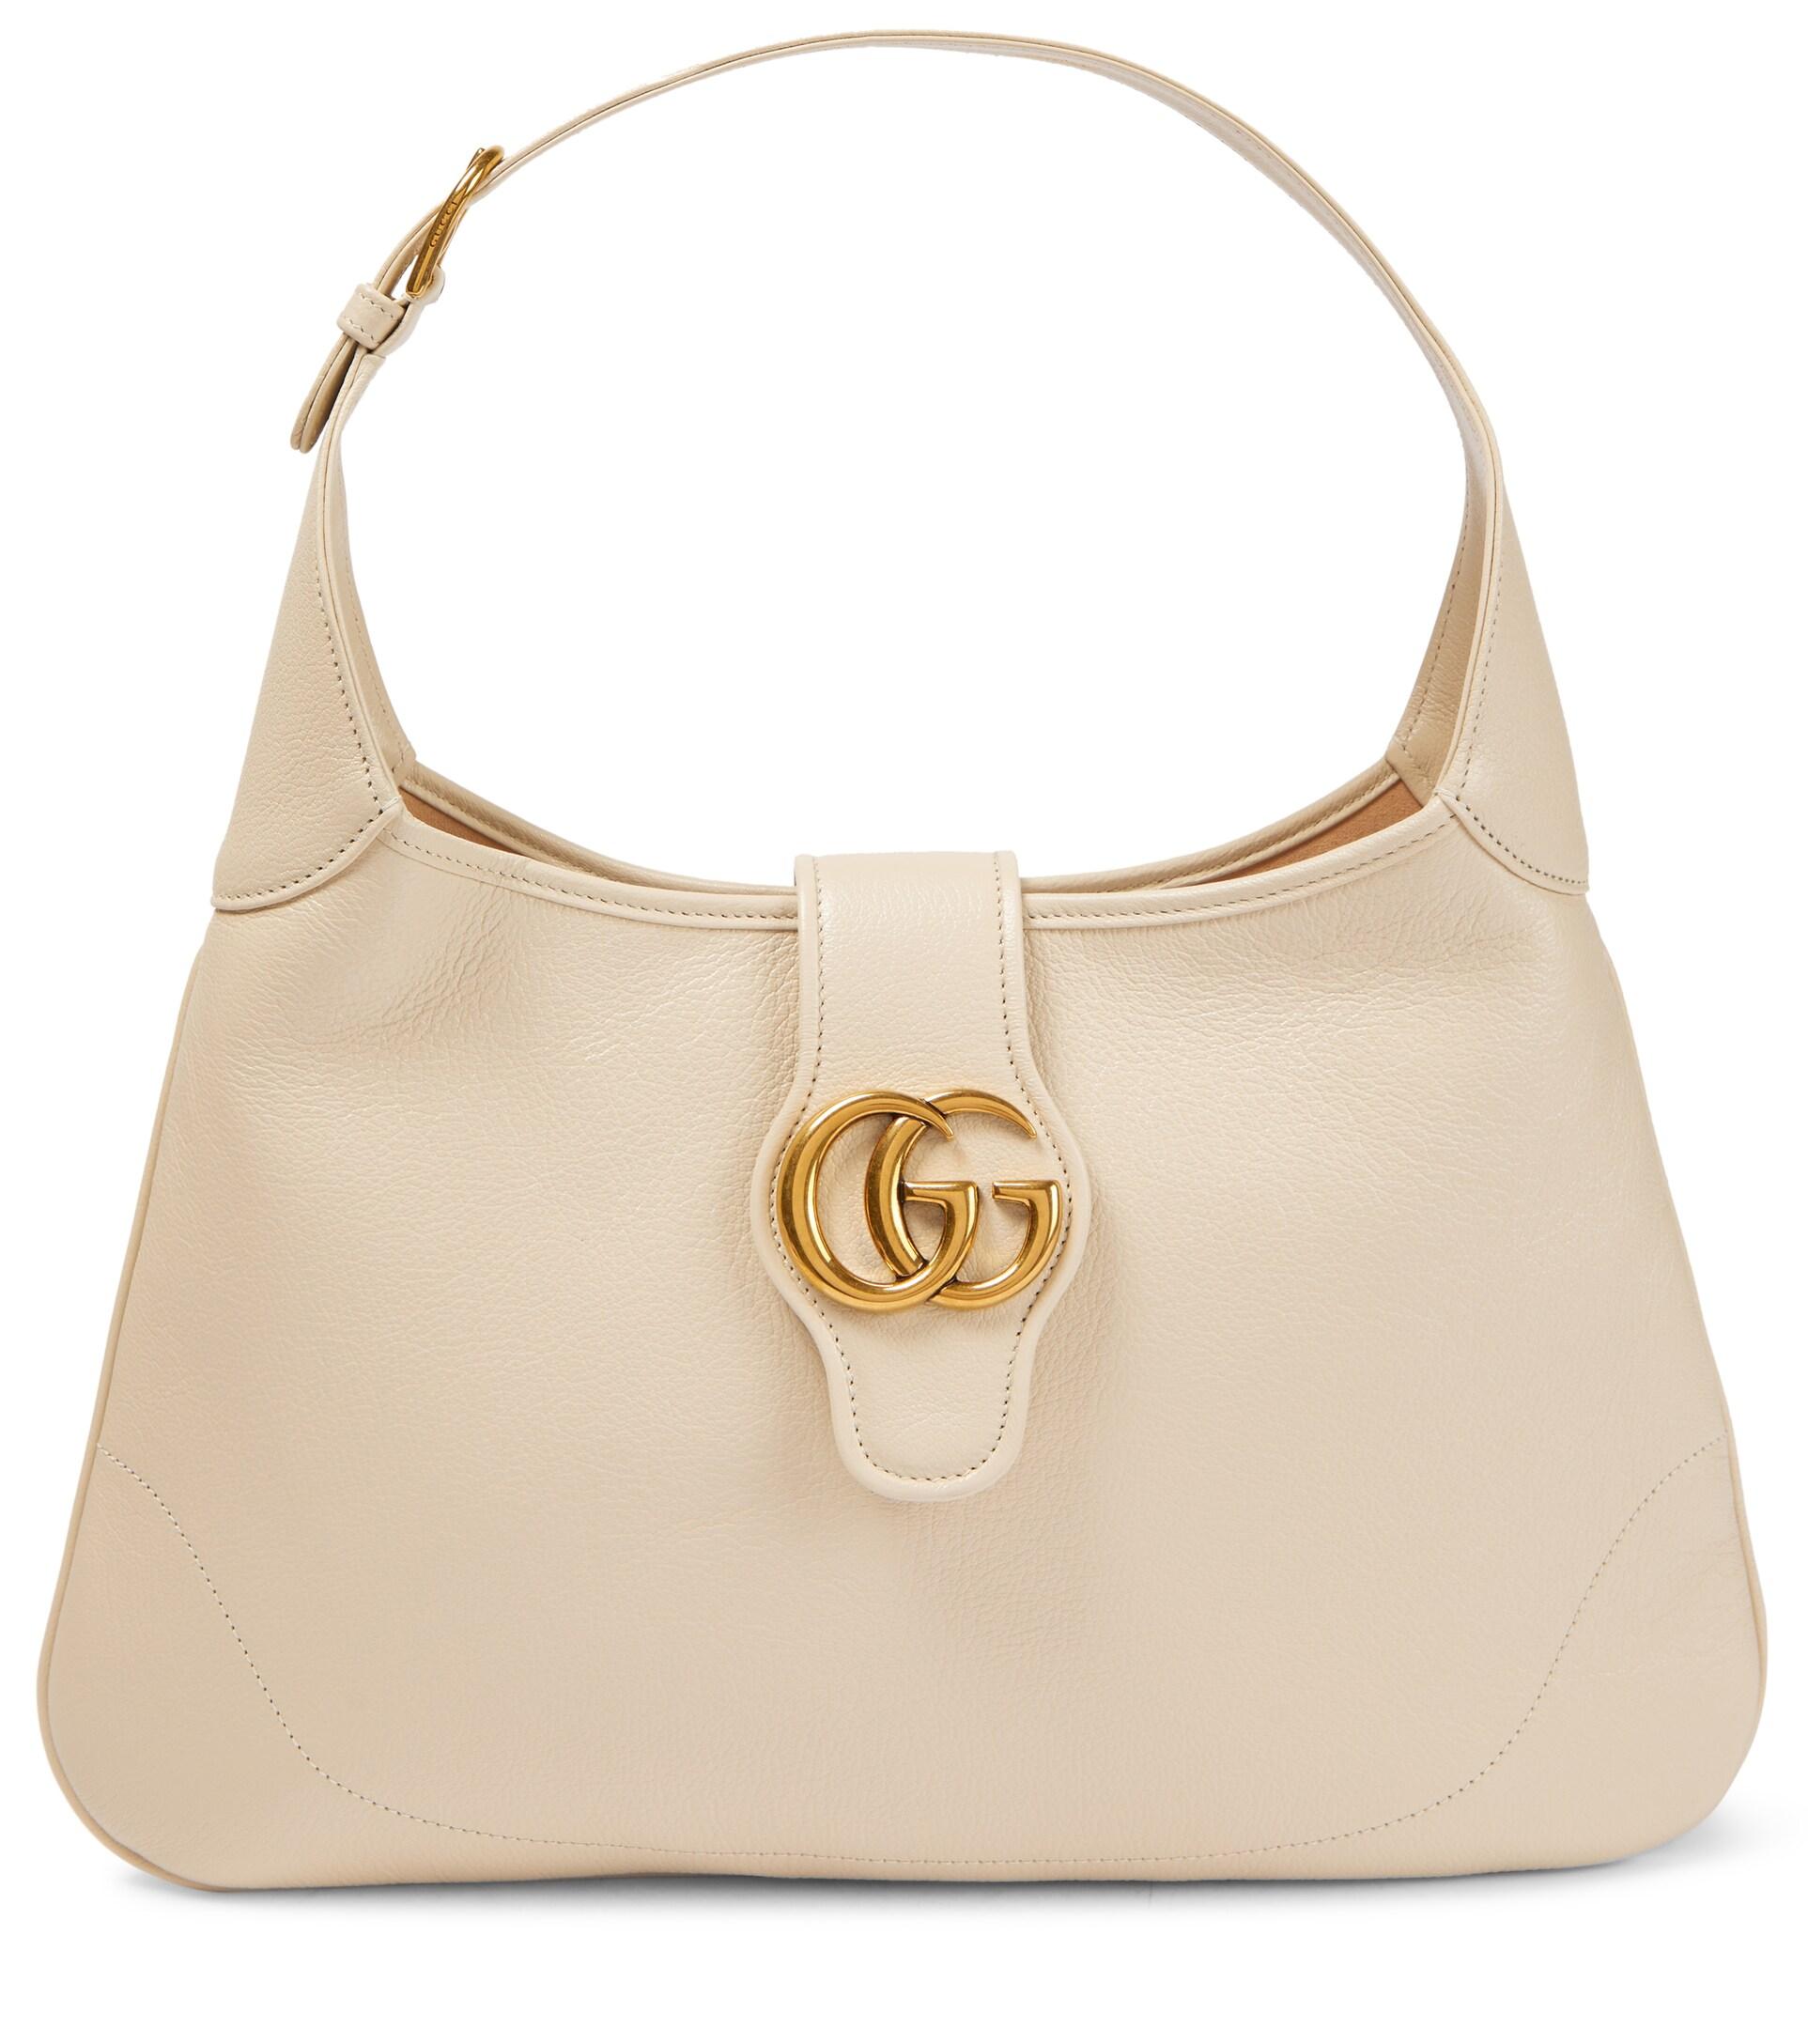 Gucci Aphrodite Medium Leather Shoulder Bag in Natural | Lyst